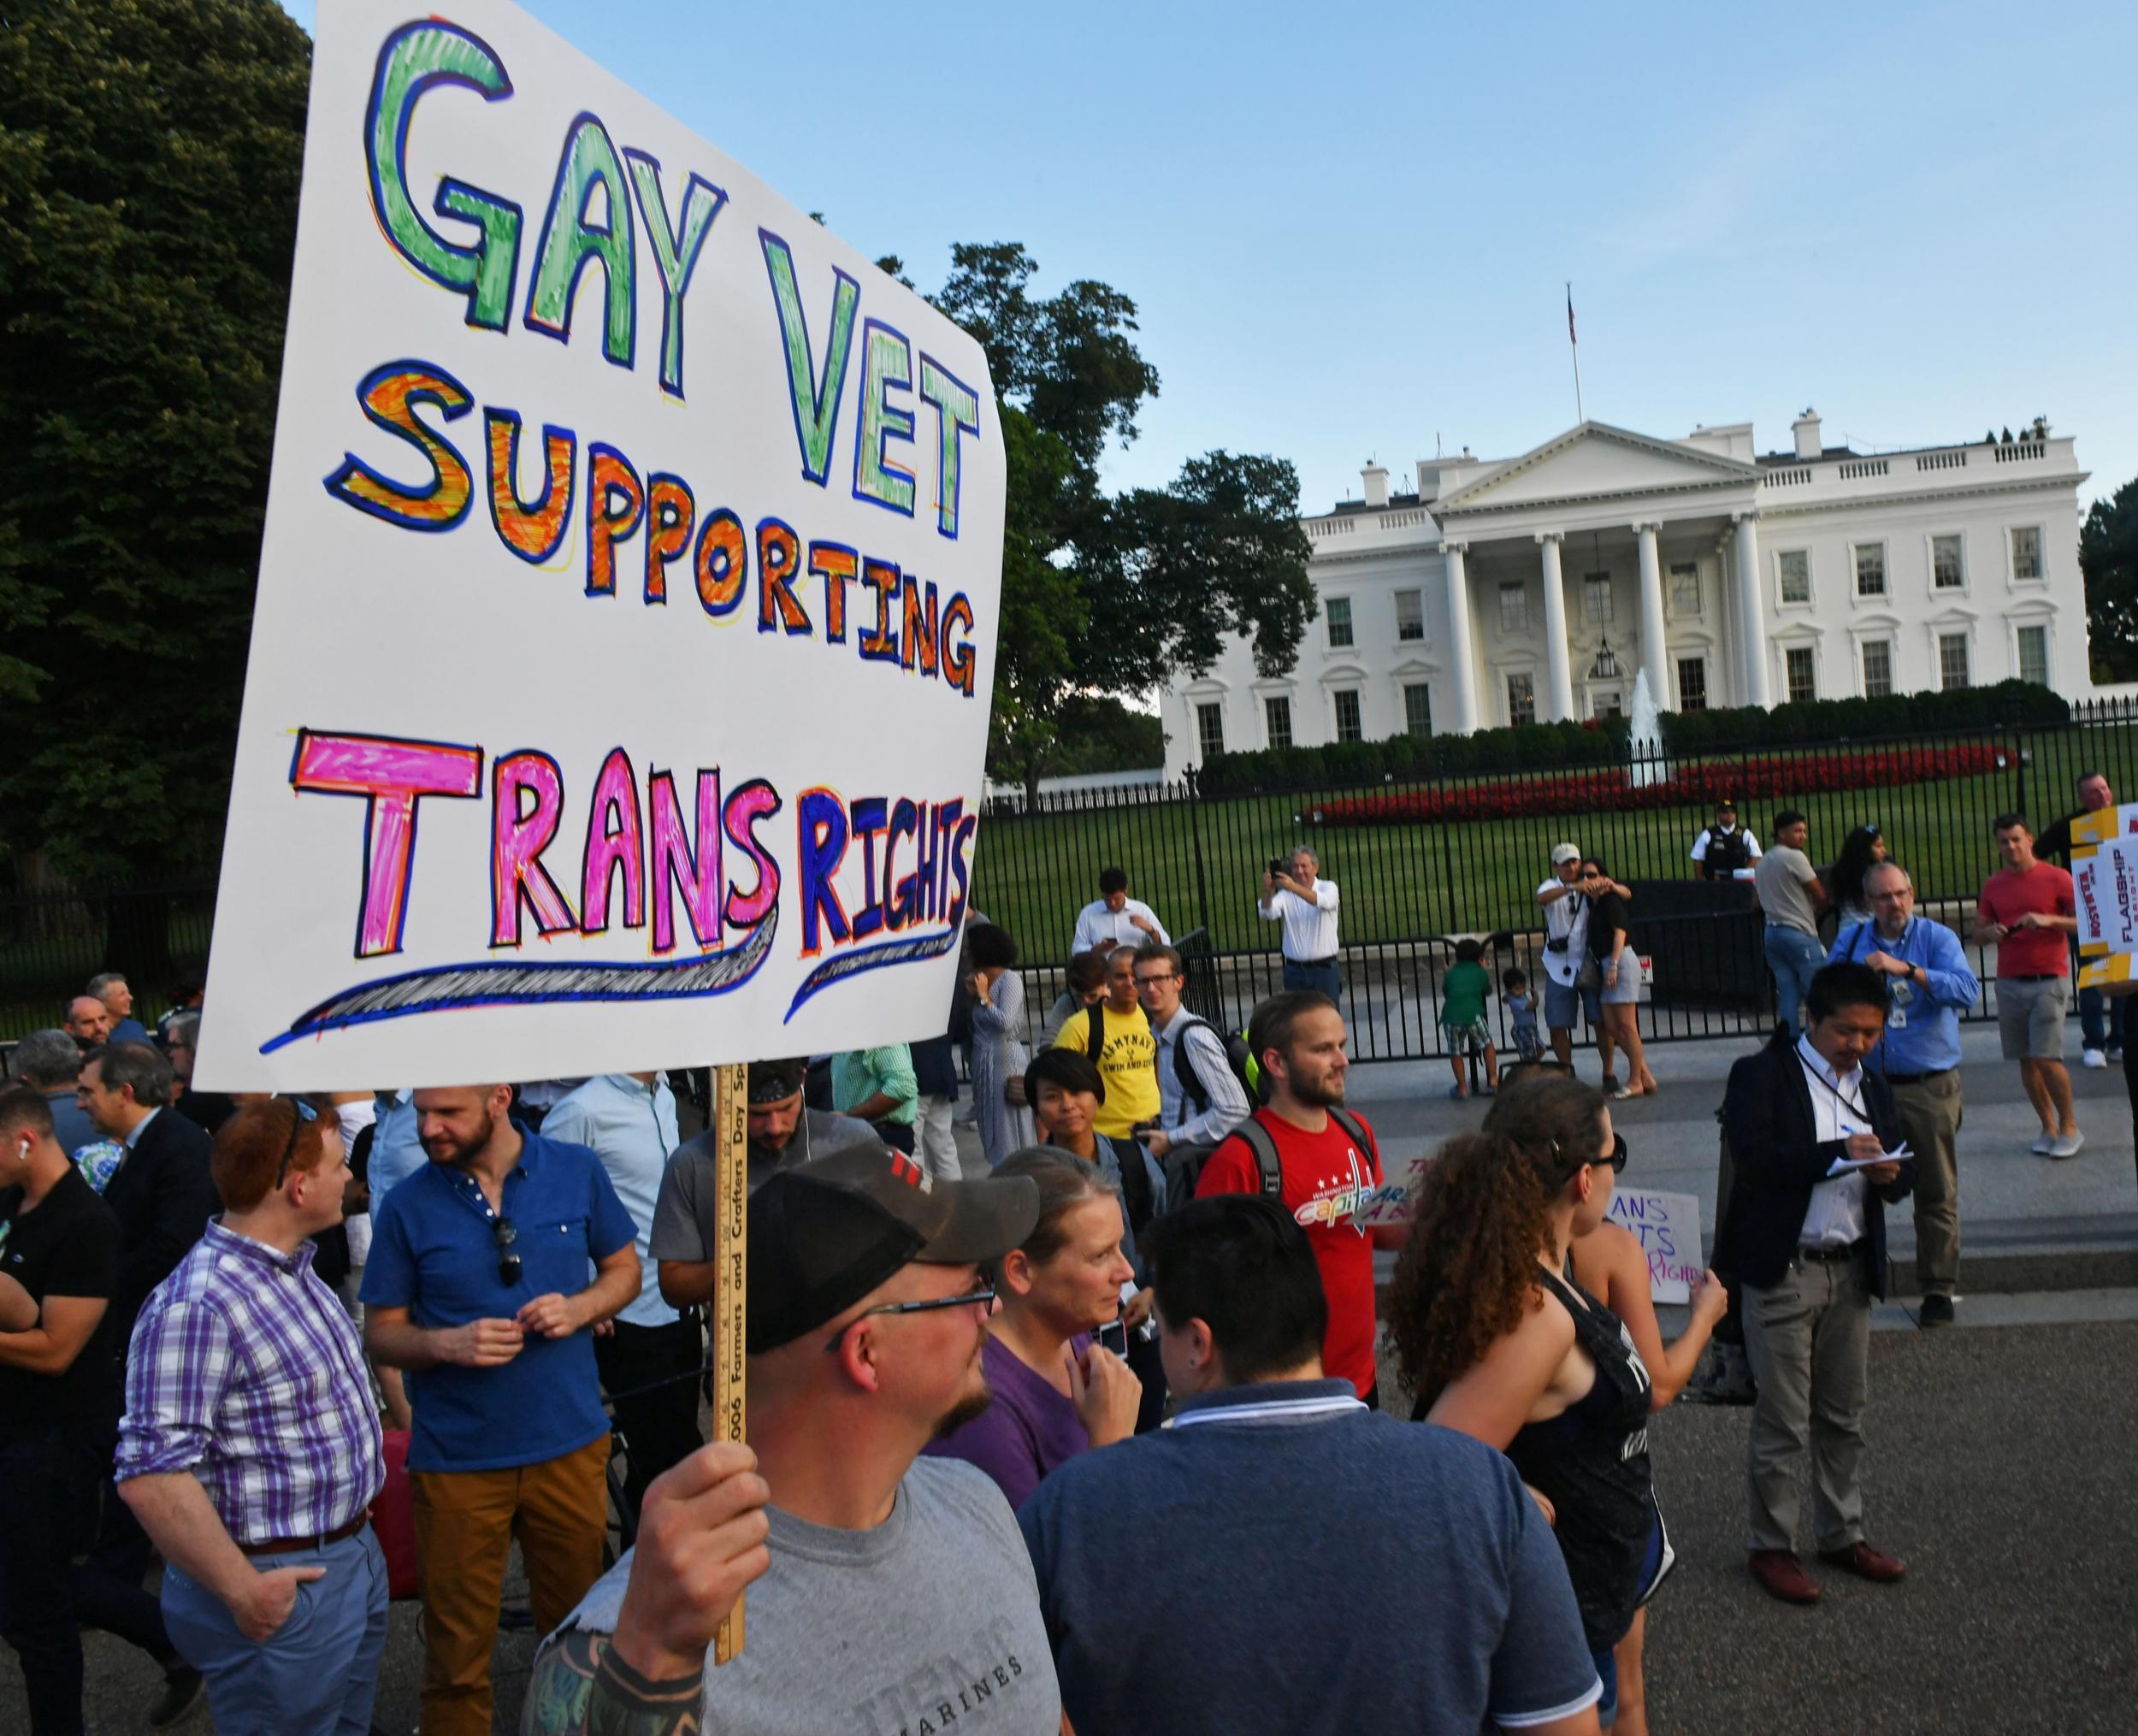 Protests for Trump's ban on transgender troops